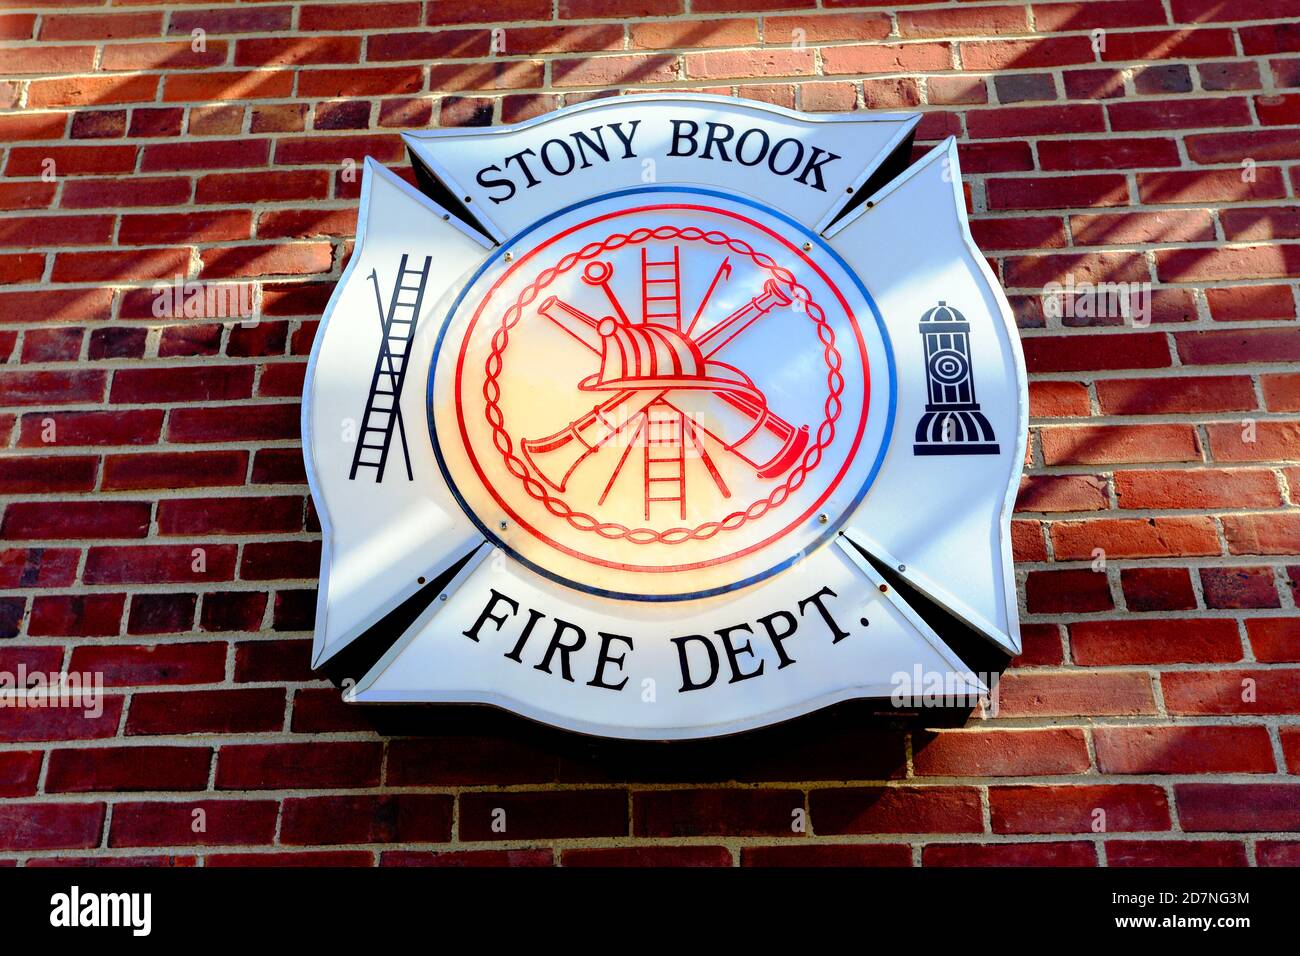 Stony Brook New York Fire Department building Stock Photo